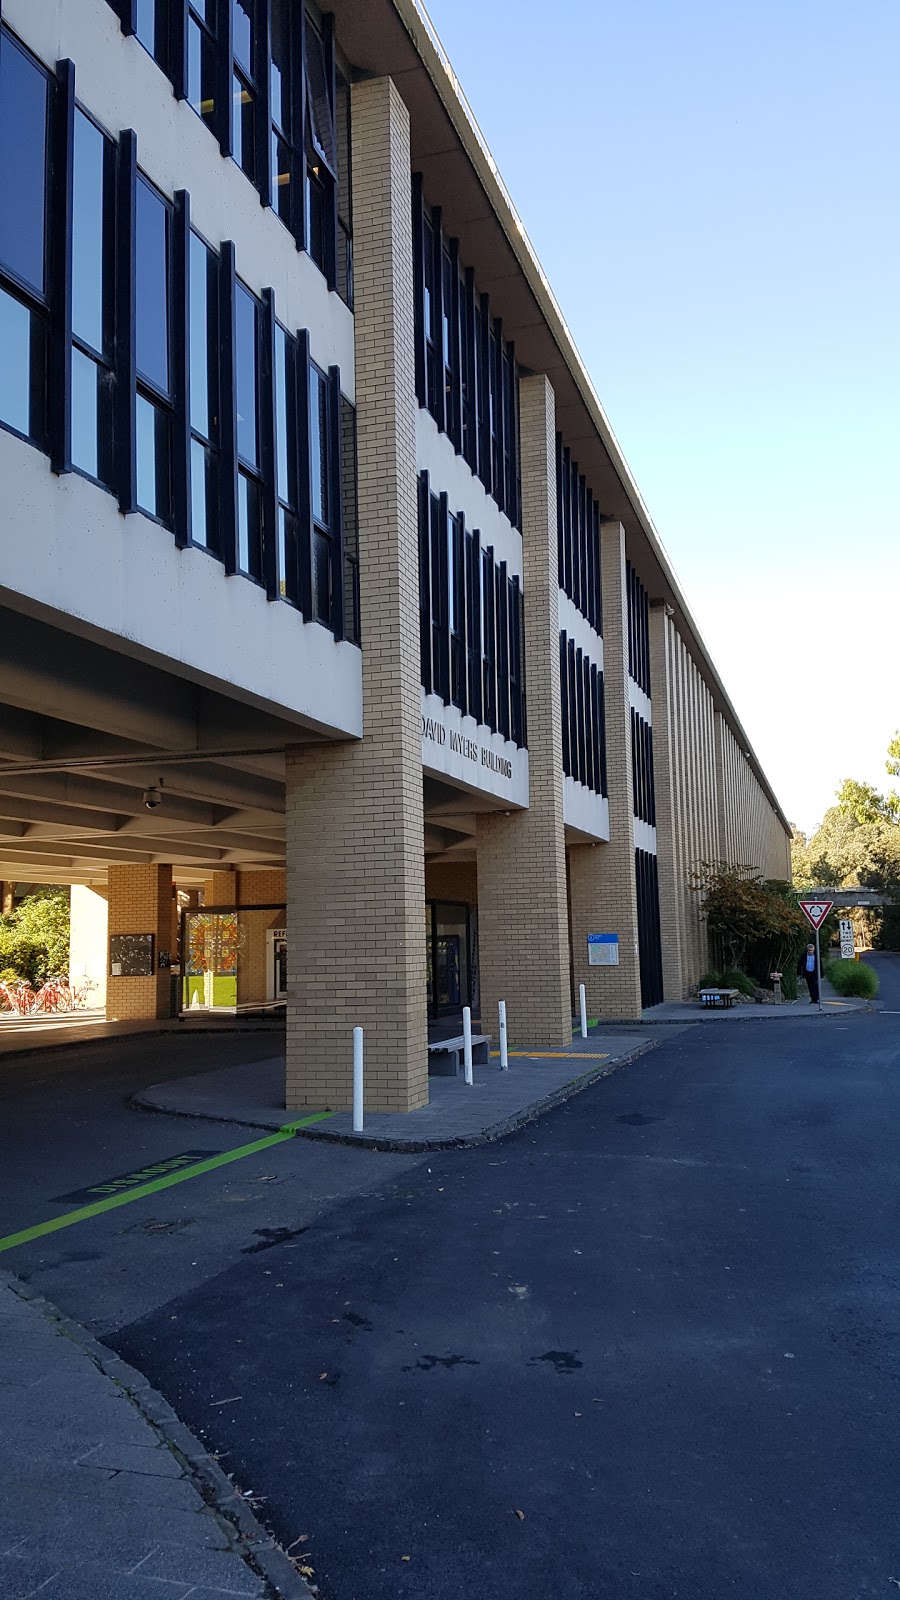 David Myers Building | La Trobe University, Science Dr, Bundoora VIC 3083, Australia | Phone: 1300 528 762